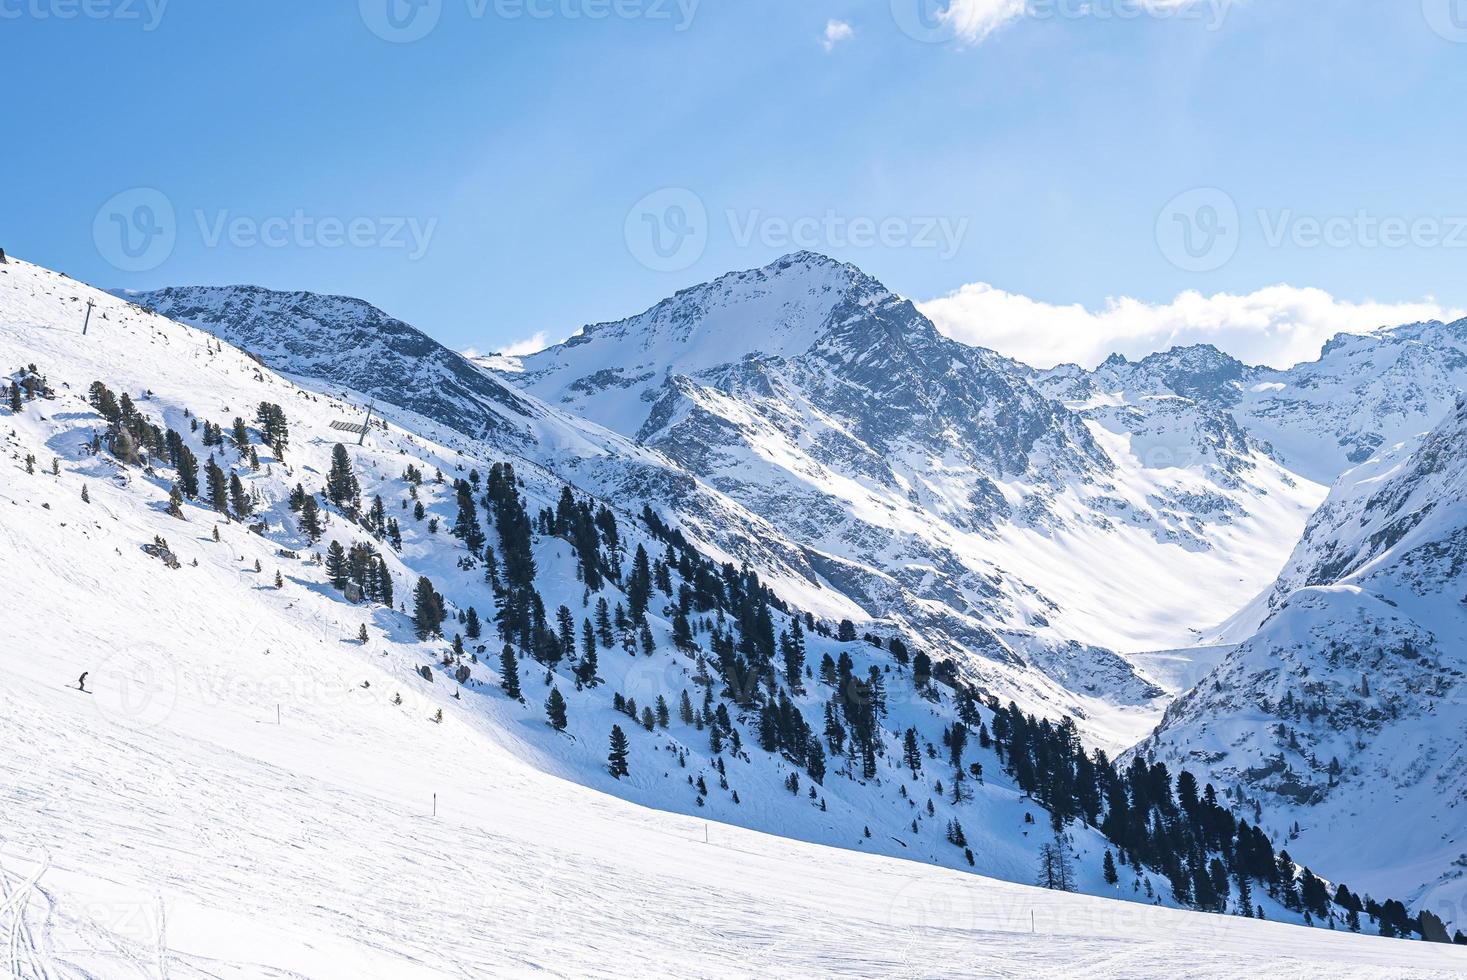 idyllisk snöig bergskedja mot himmel i alperna foto